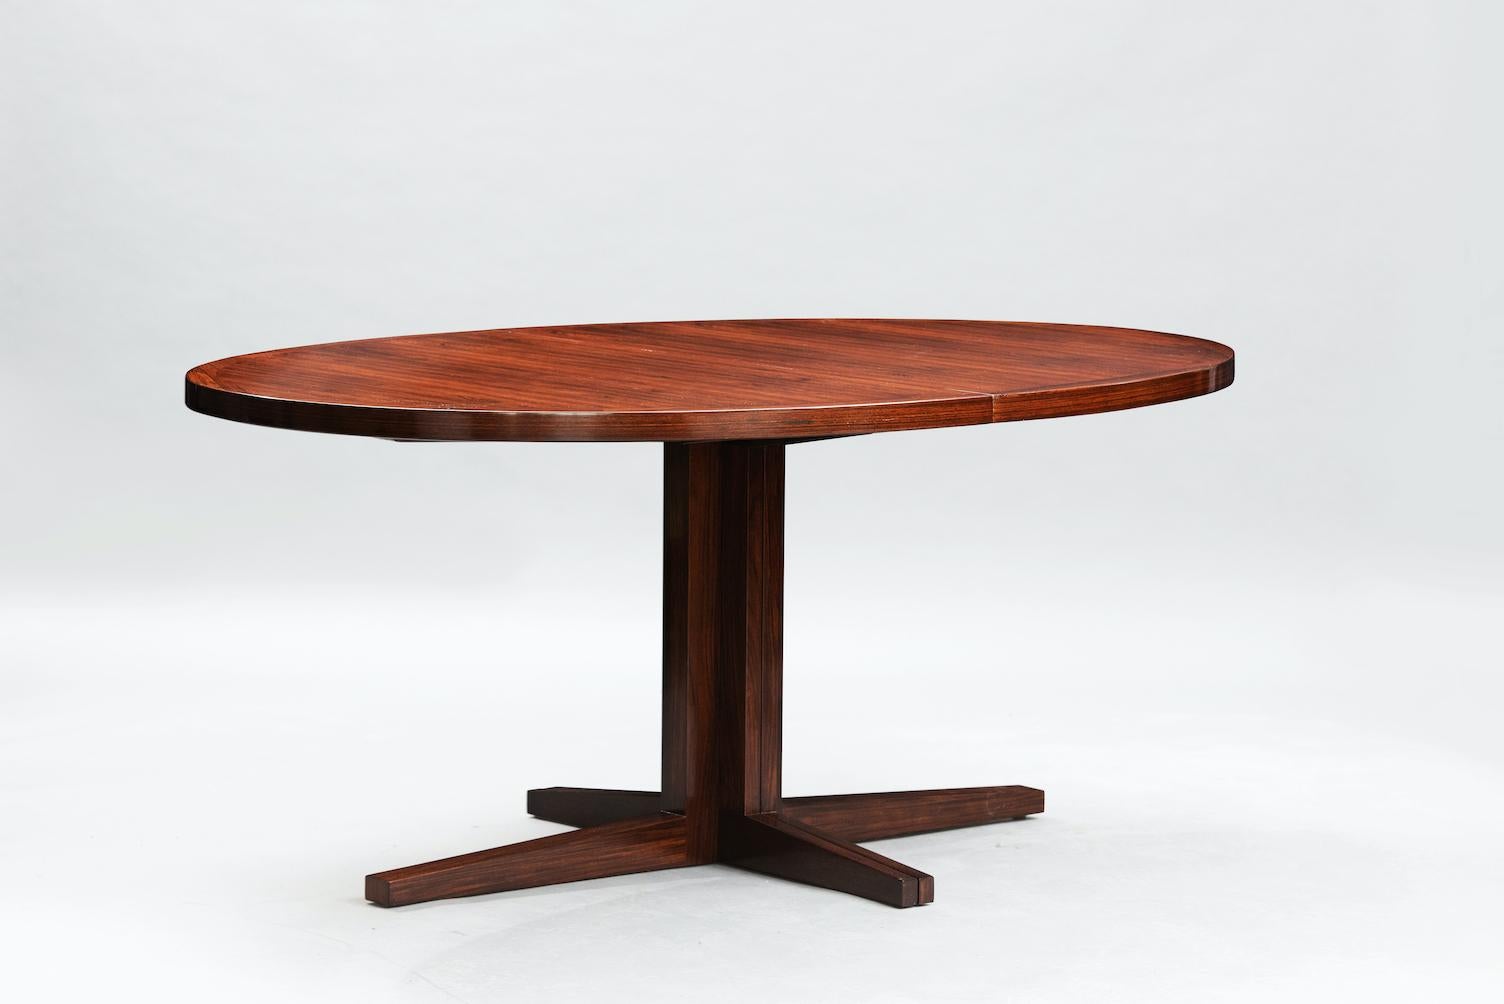 John Mortensen extendable rosewood oval dining table for Heltborg Møbelfabrik Model HM55
Dimensions: Closed 164cm. Open 264cm.